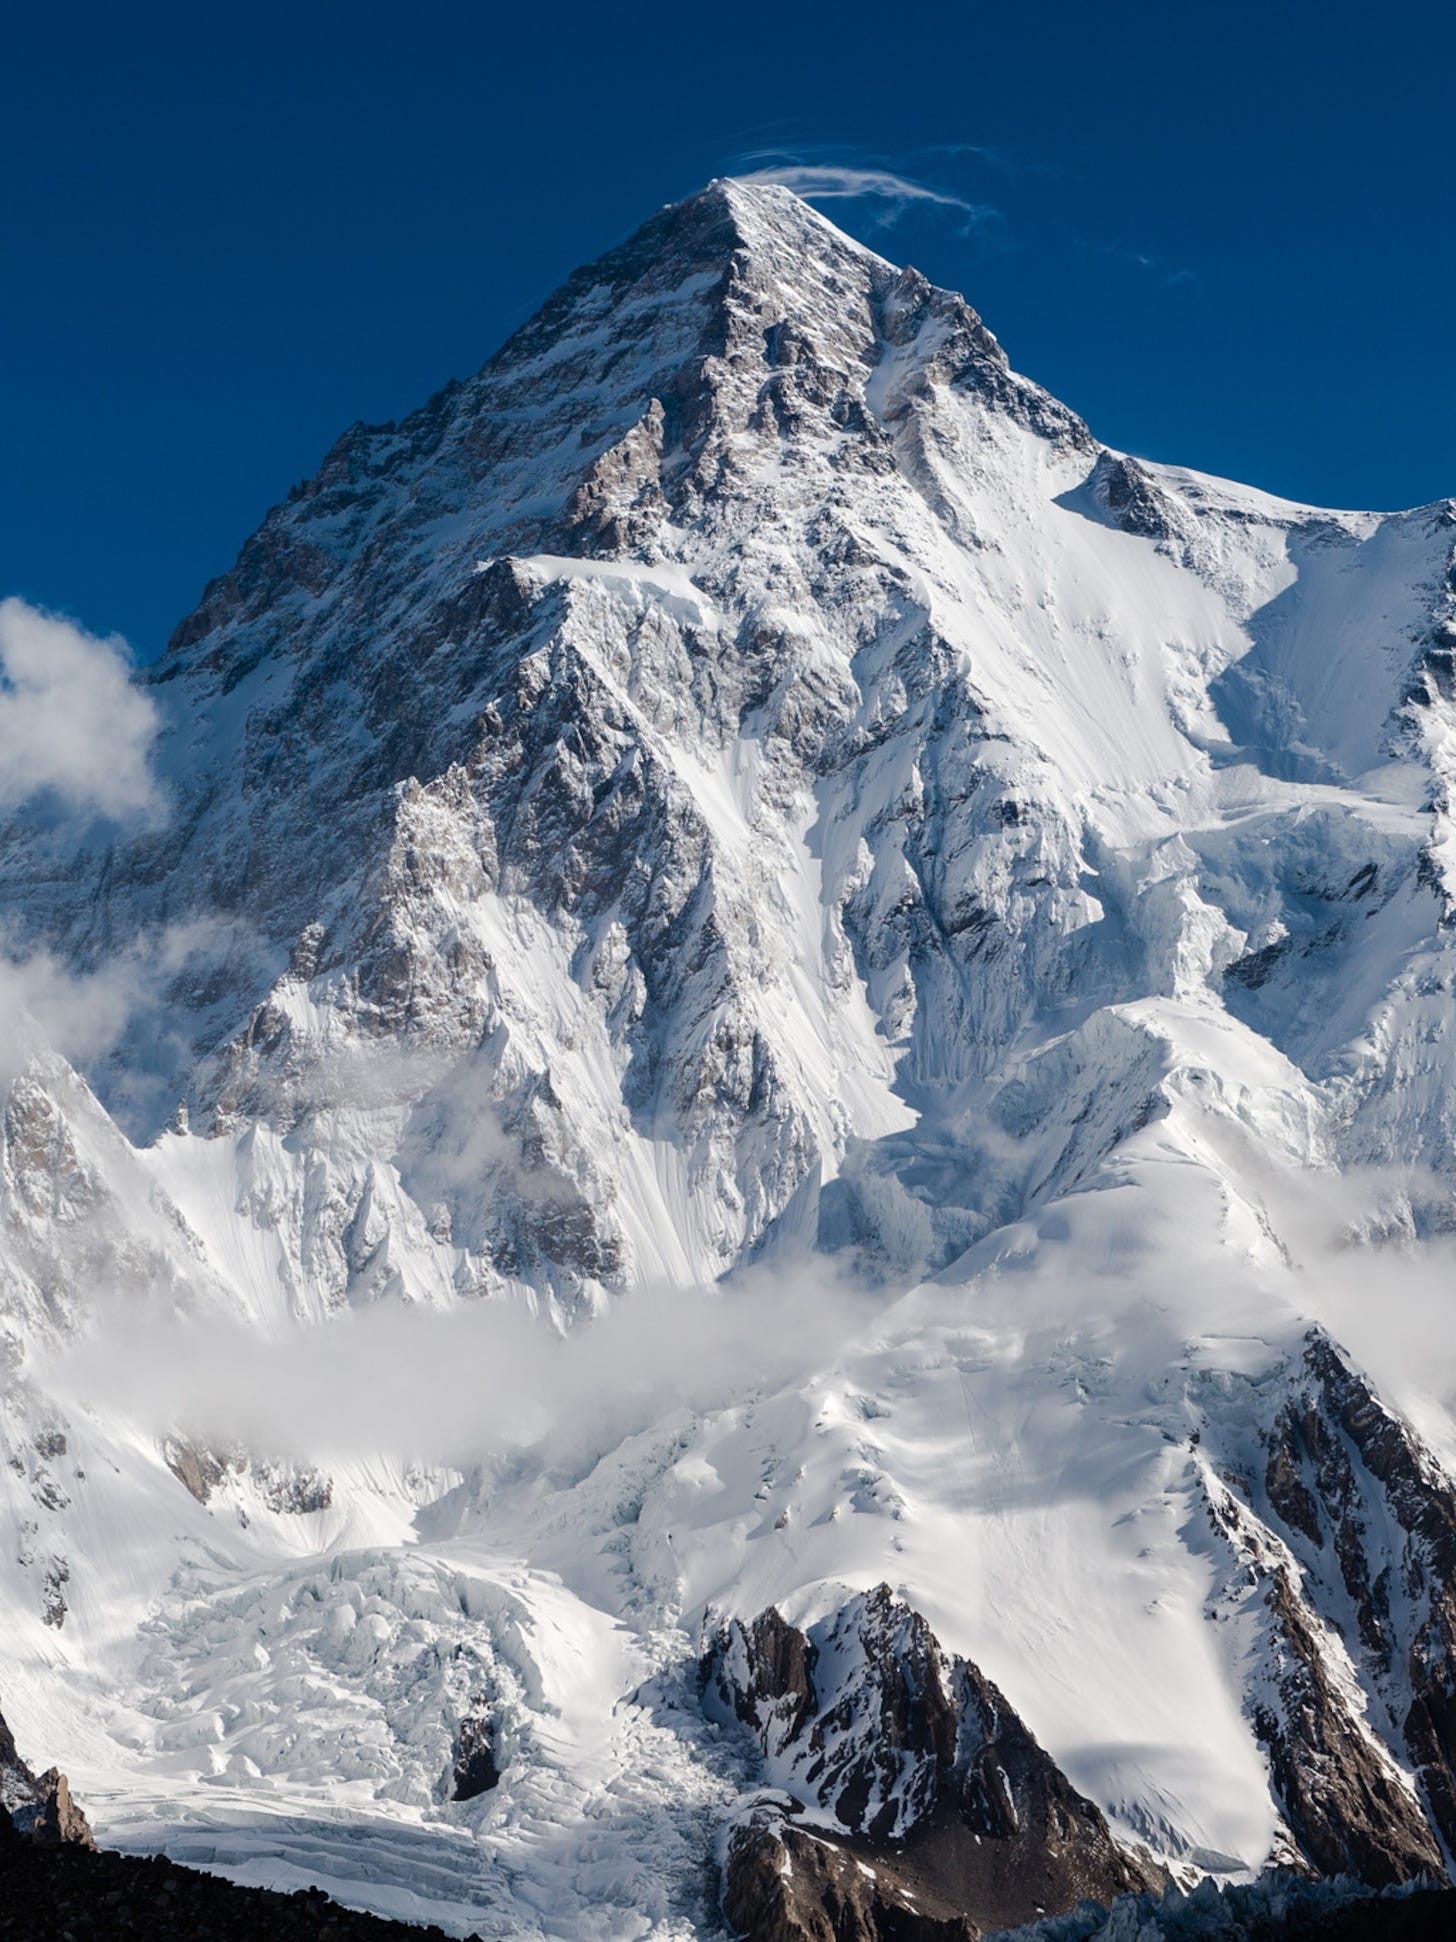 Nepali Mountaineers Achieve Historic Winter First on K2